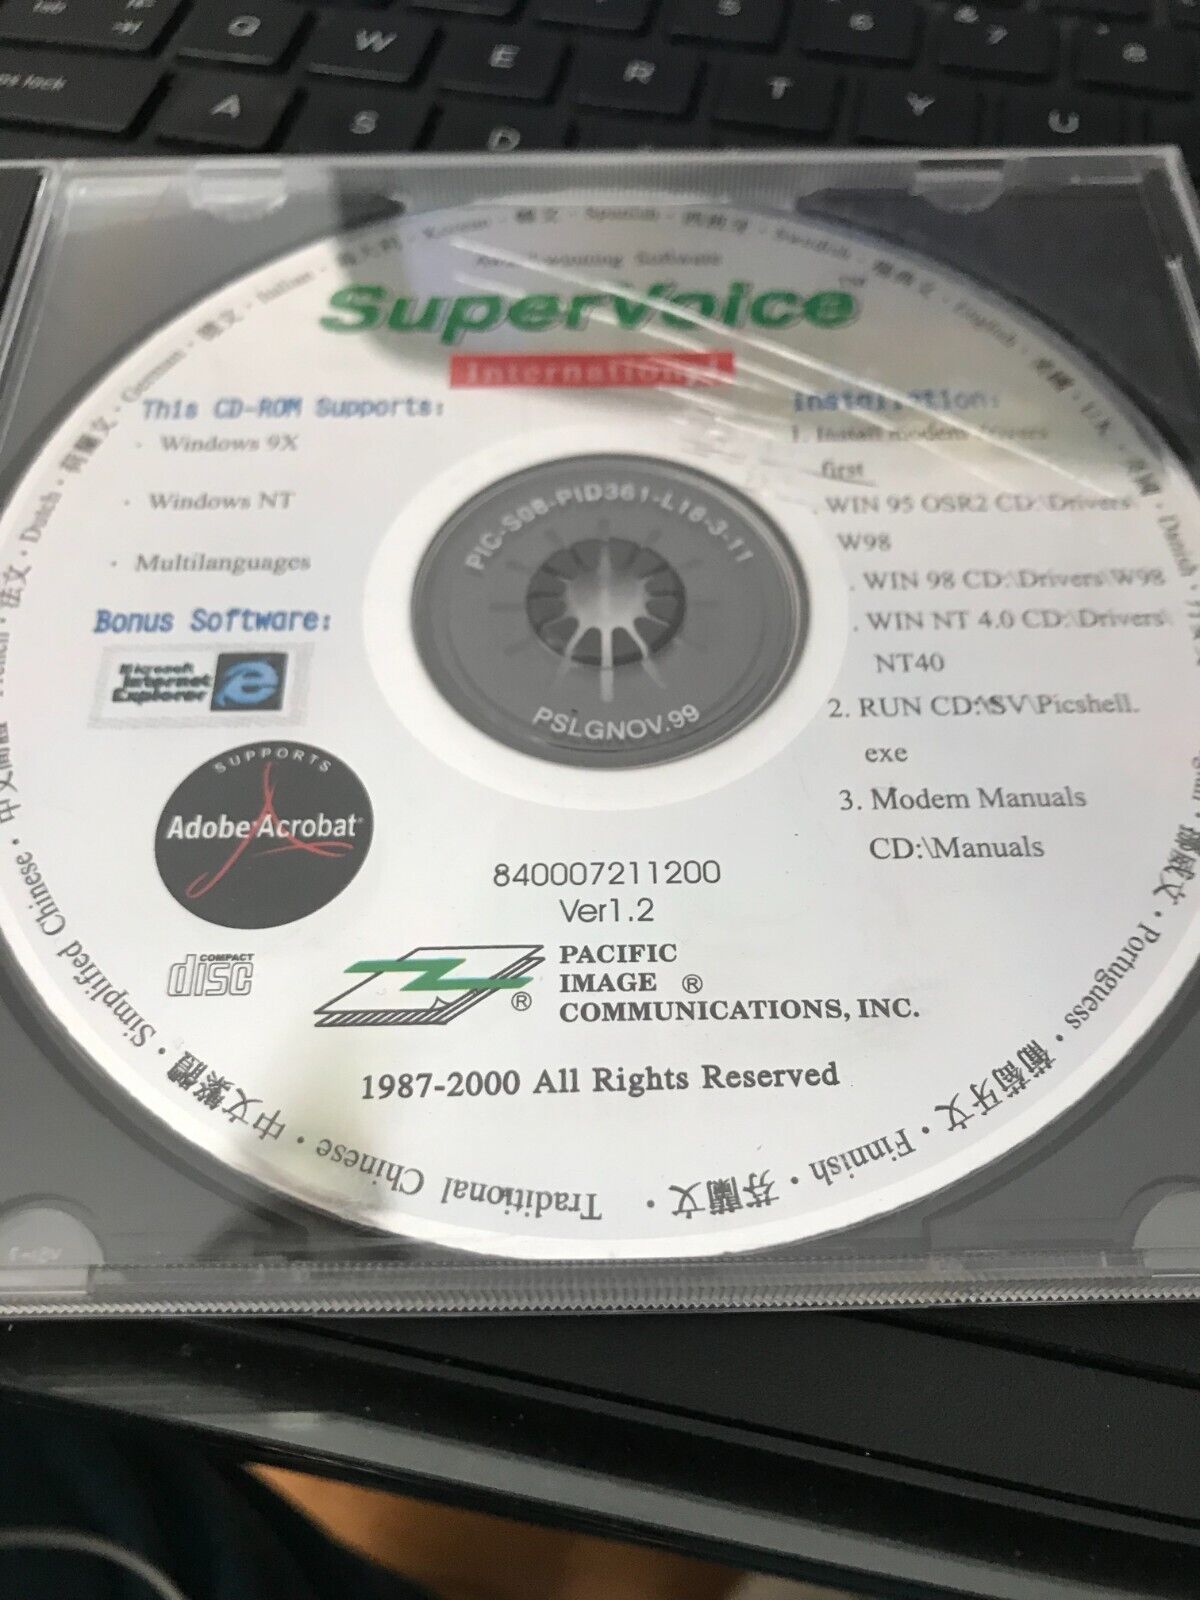 SuperVoice International for Windows Install CD